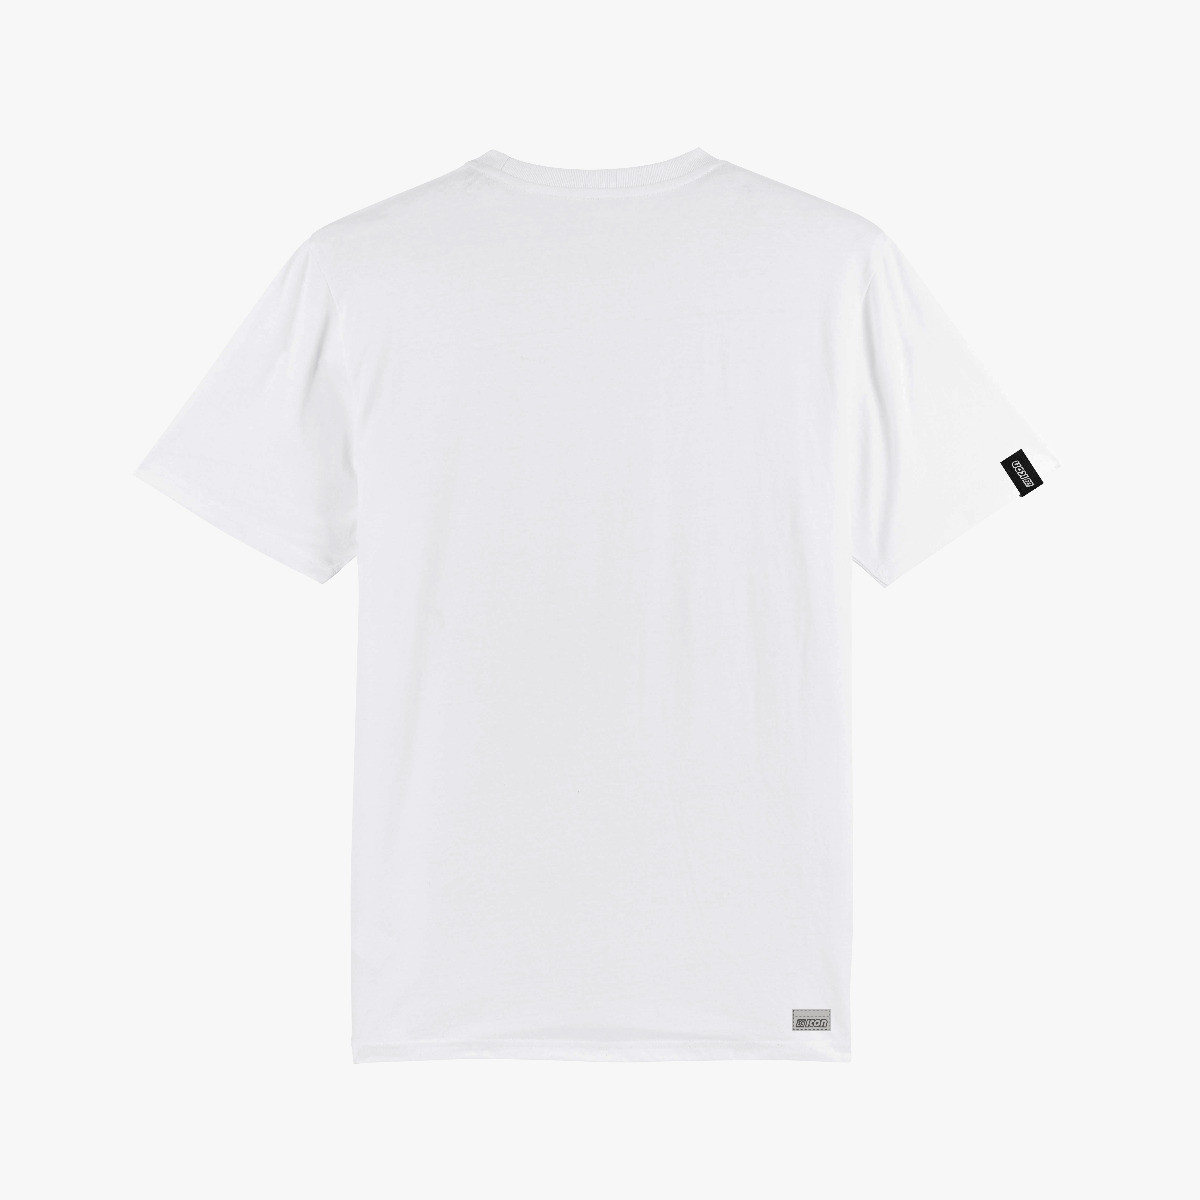 Scicon Sports | SC 1980 Logo Lifestyle Cotton T-shirt - White - TS61851